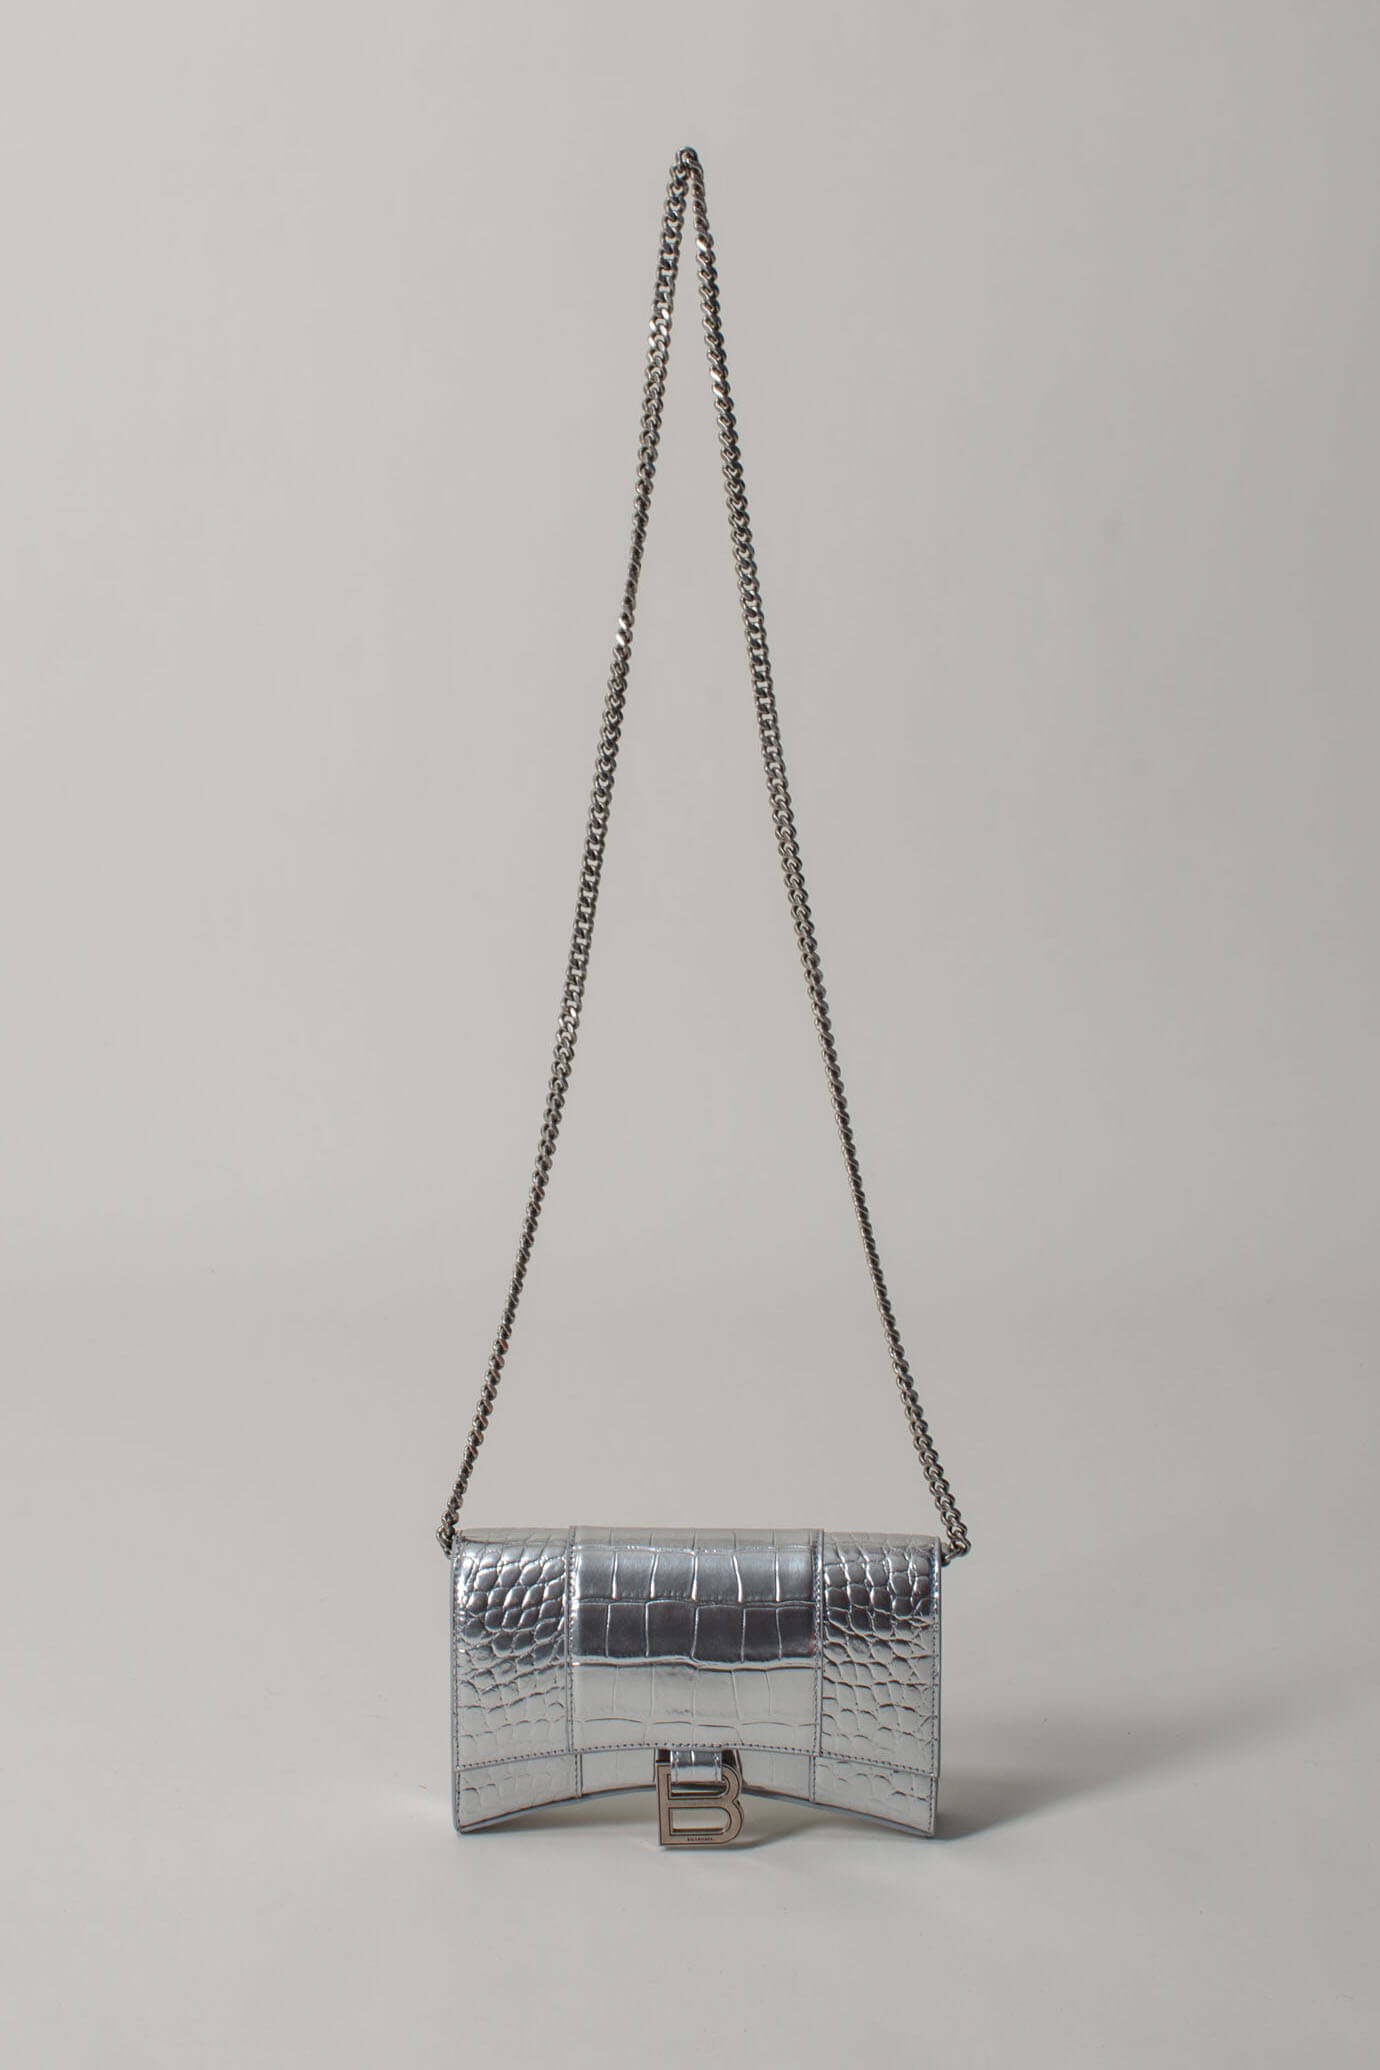 Balenciaga Hourglass Xs Metallic Satchel Bag In 8110 Silver